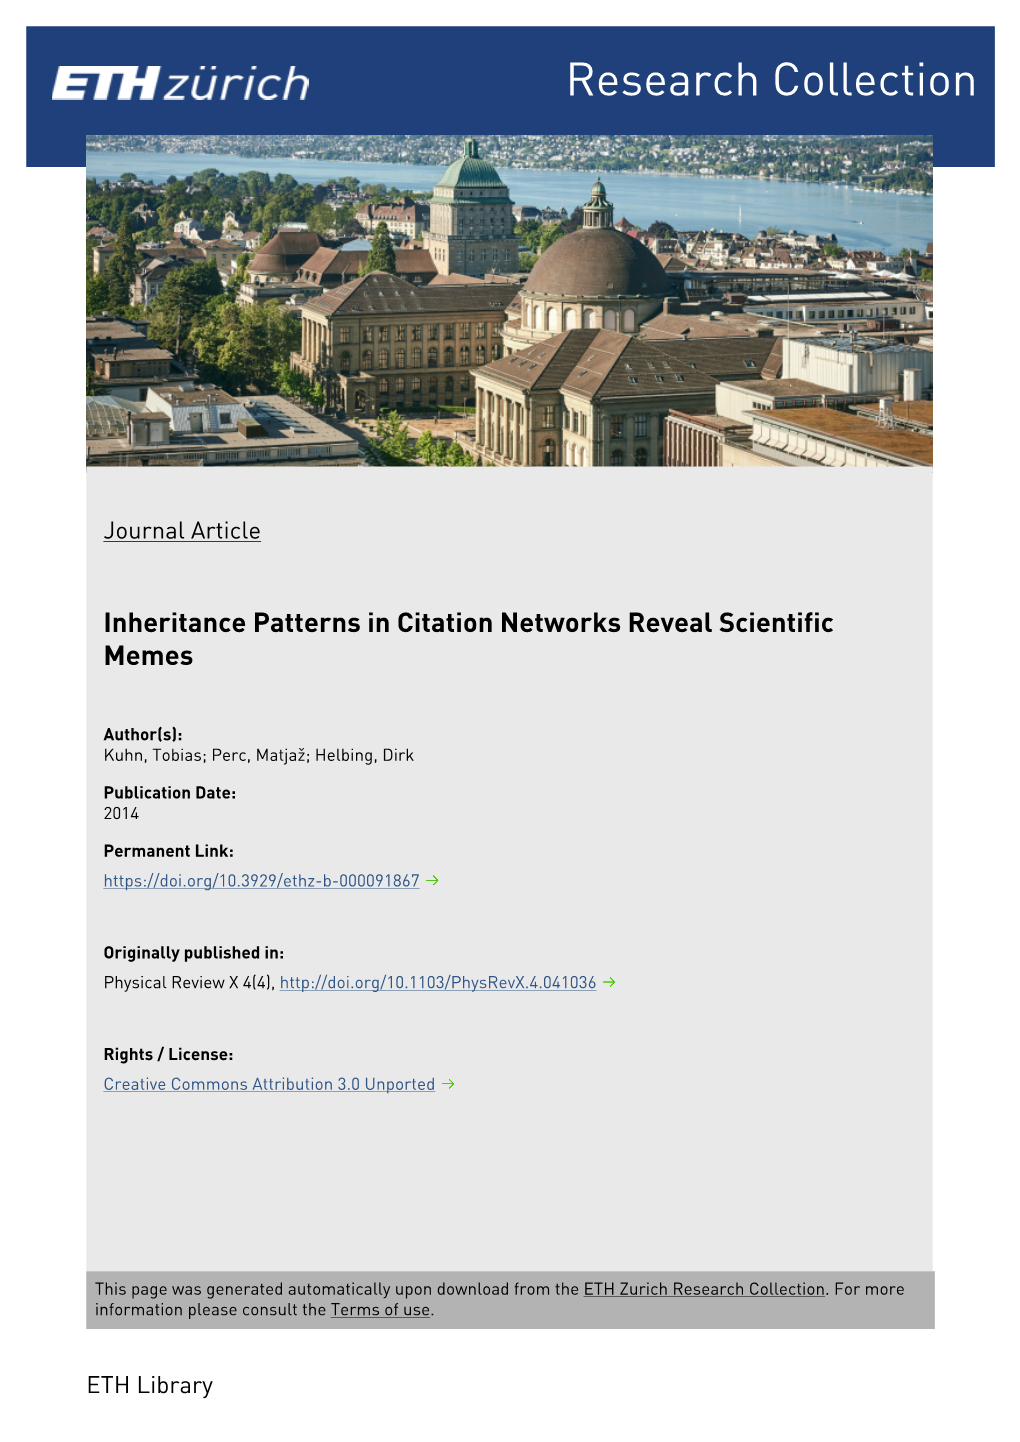 Inheritance Patterns in Citation Networks Reveal Scientific Memes